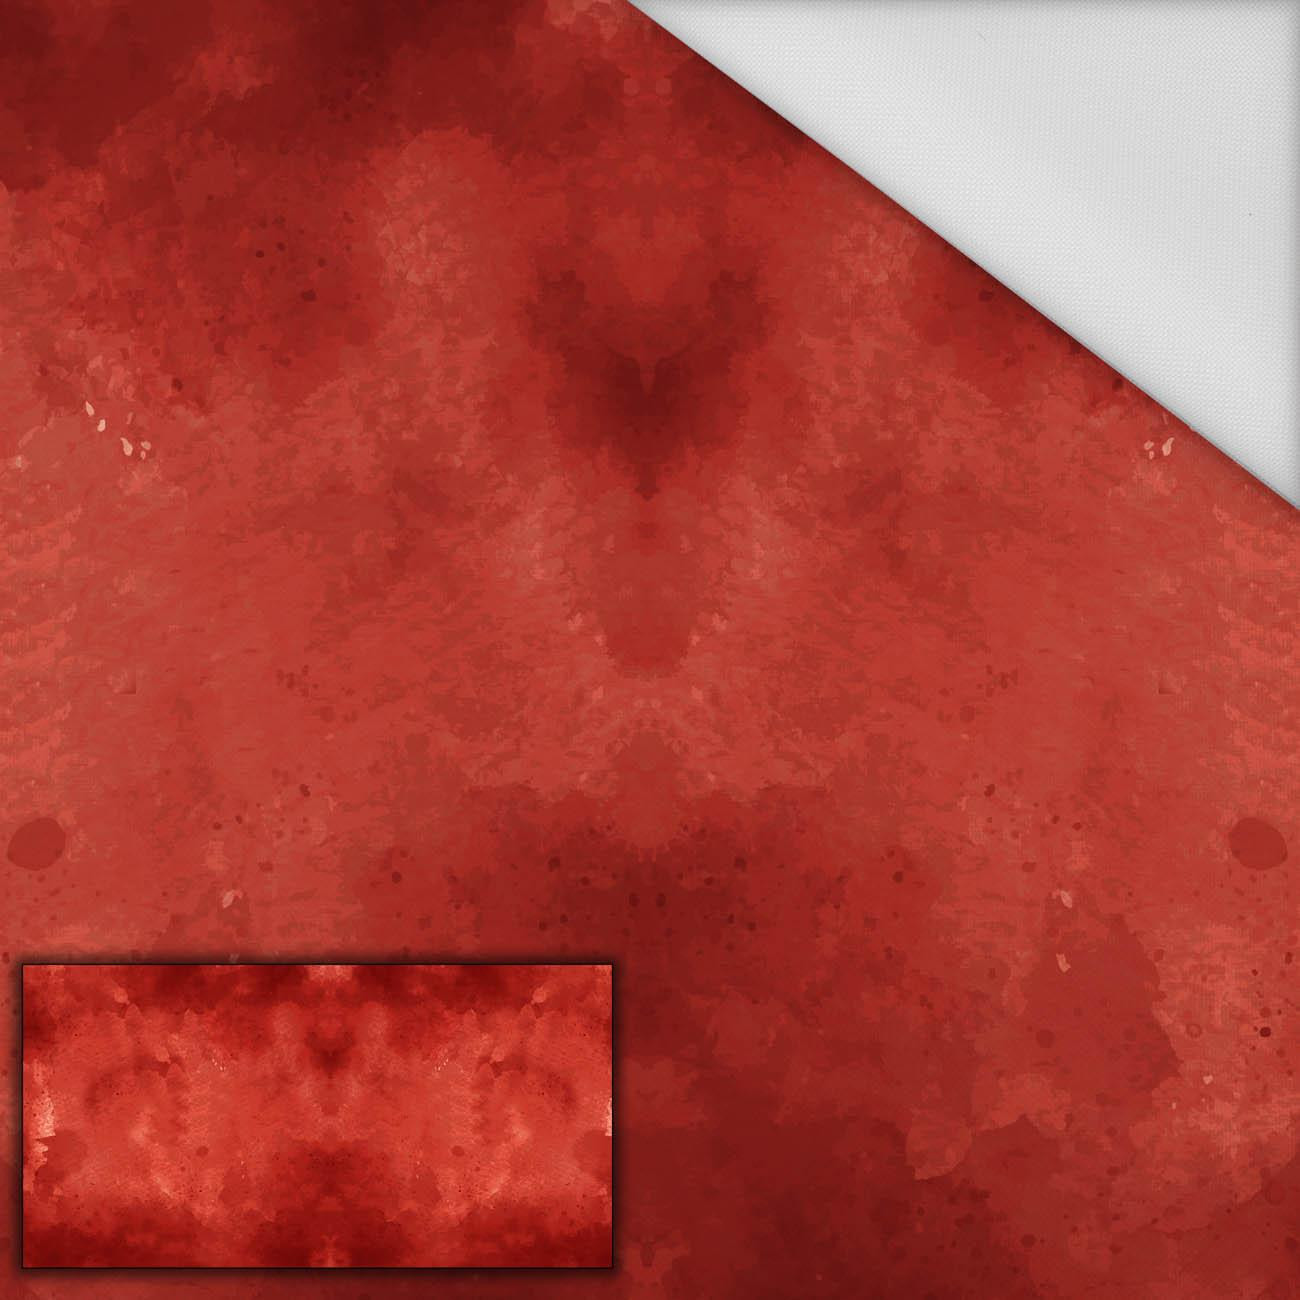 RED SPECKS - panel (80cm x 155cm) Waterproof woven fabric